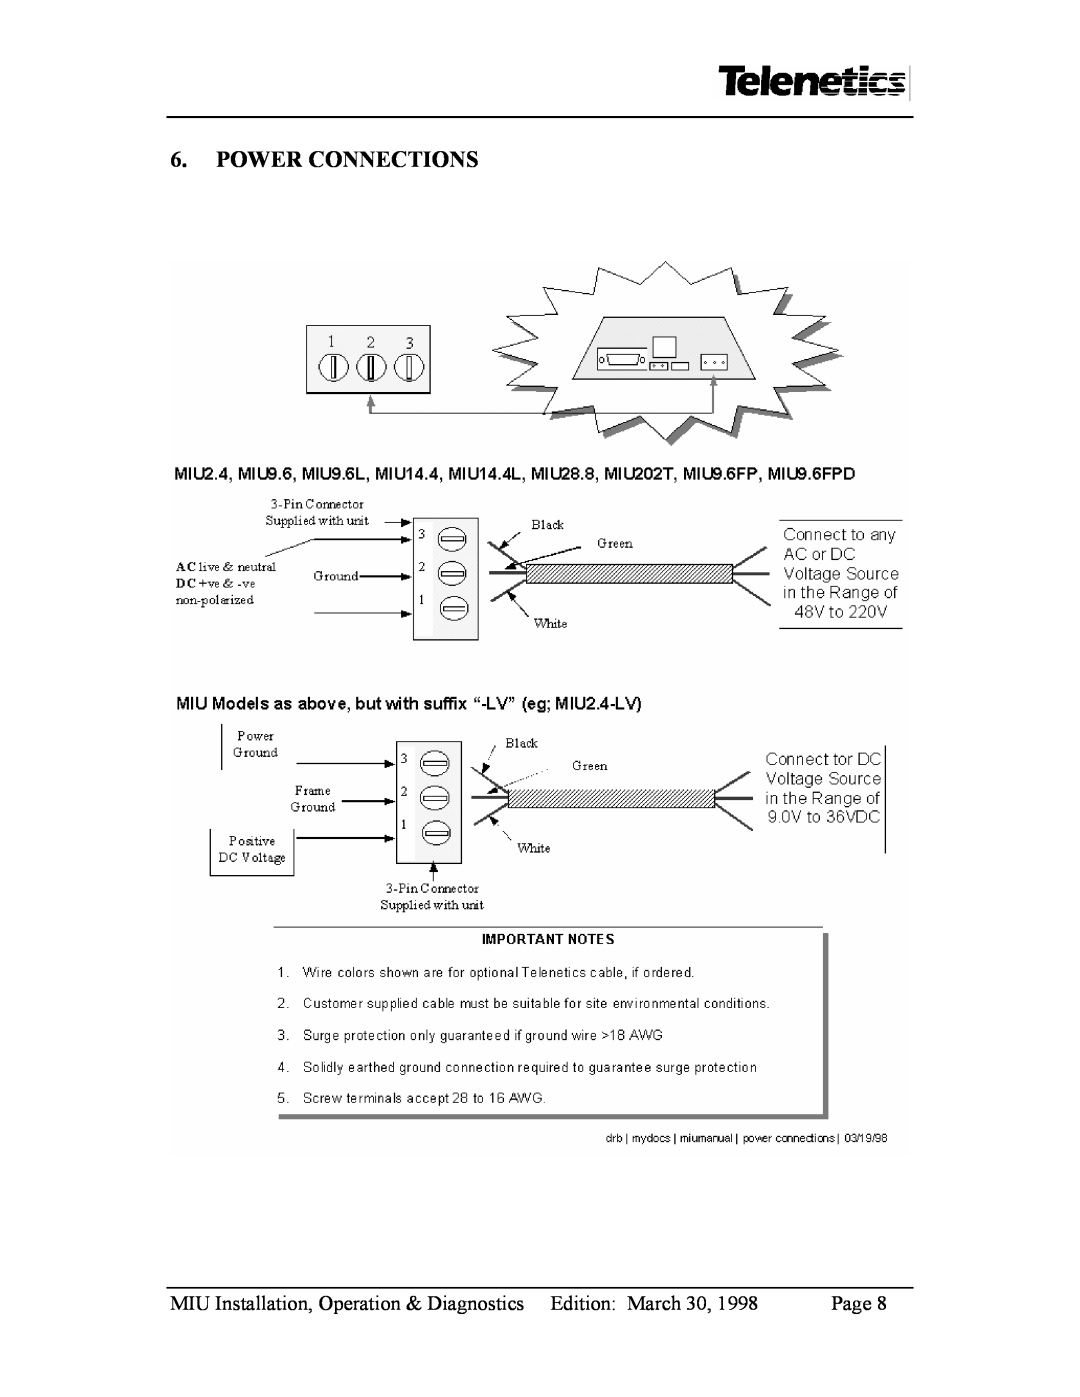 Telenetics MIU28.8, MIU9.6, MIU14.4 Power Connections, MIU Installation, Operation & Diagnostics Edition March 30, Page 